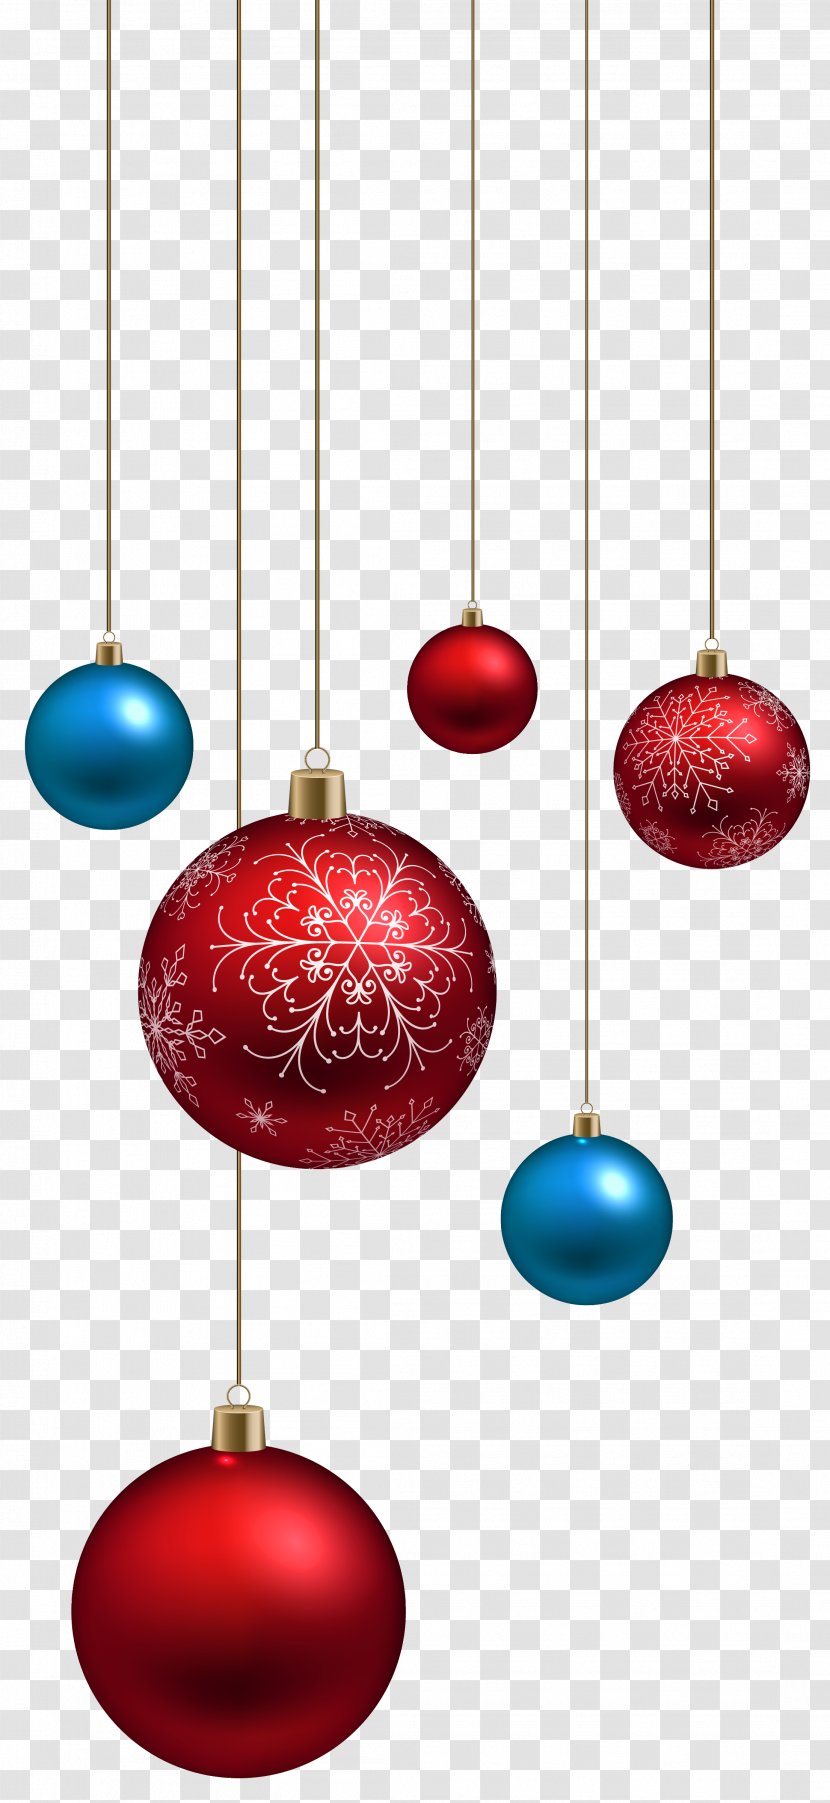 Santa Claus Christmas Ornament Clip Art - Red And Blue Balls Clipart Image Transparent PNG